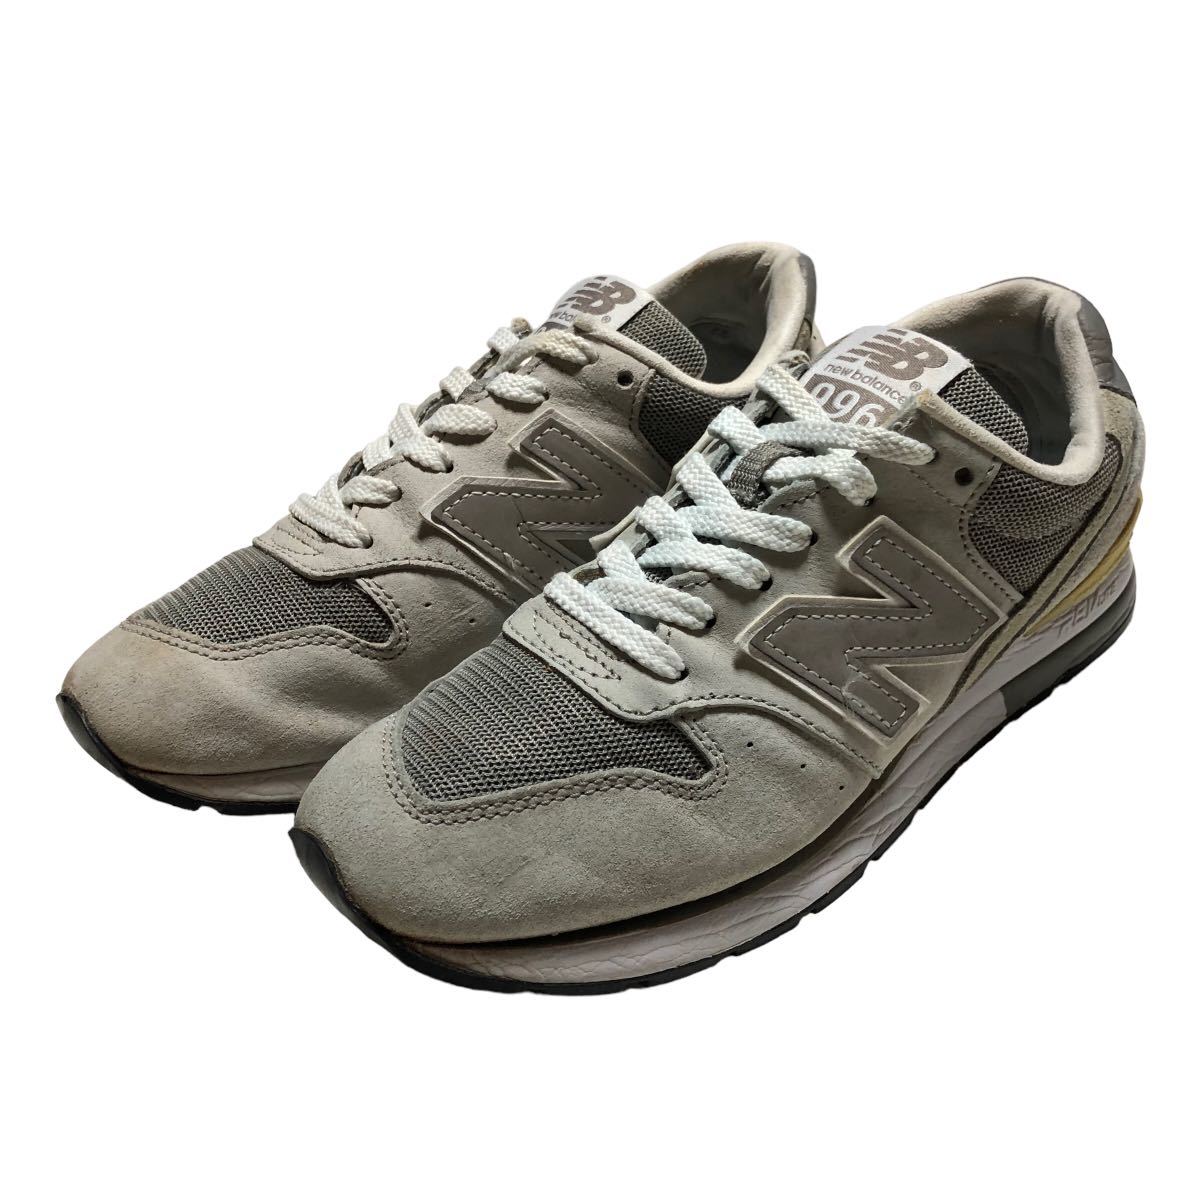 AF286 newbalance New balance MRL996 men's low cut sneakers US5 23cm D light gray silver 